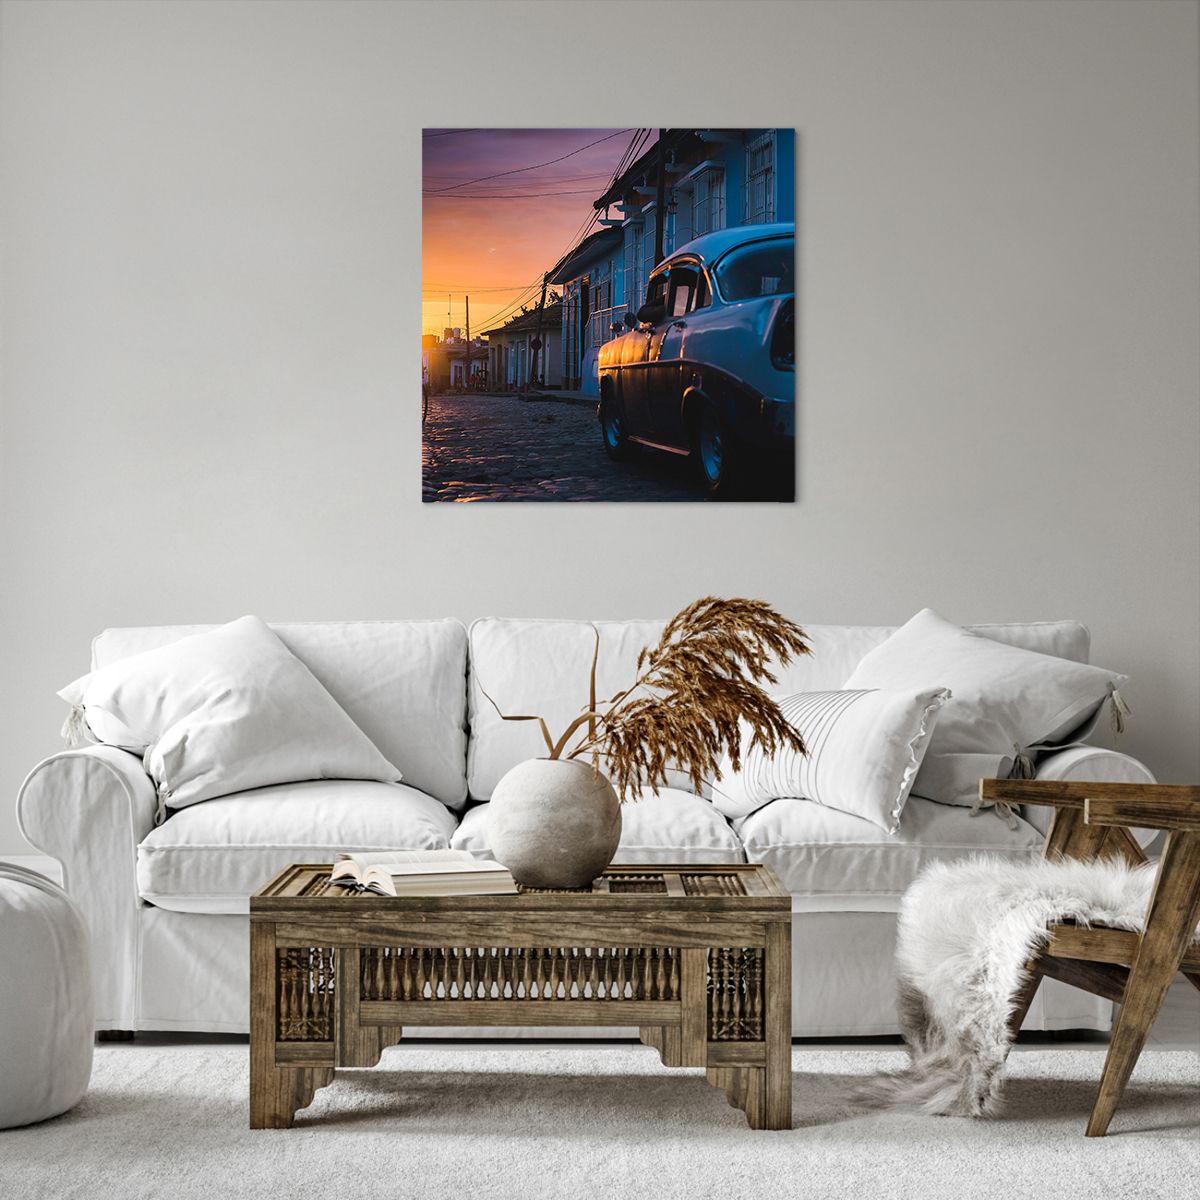 Bild auf Leinwand Retro-Auto, Bild auf Leinwand Die Architektur, Bild auf Leinwand Kuba, Bild auf Leinwand Reisen, Bild auf Leinwand Der Sonnenuntergang